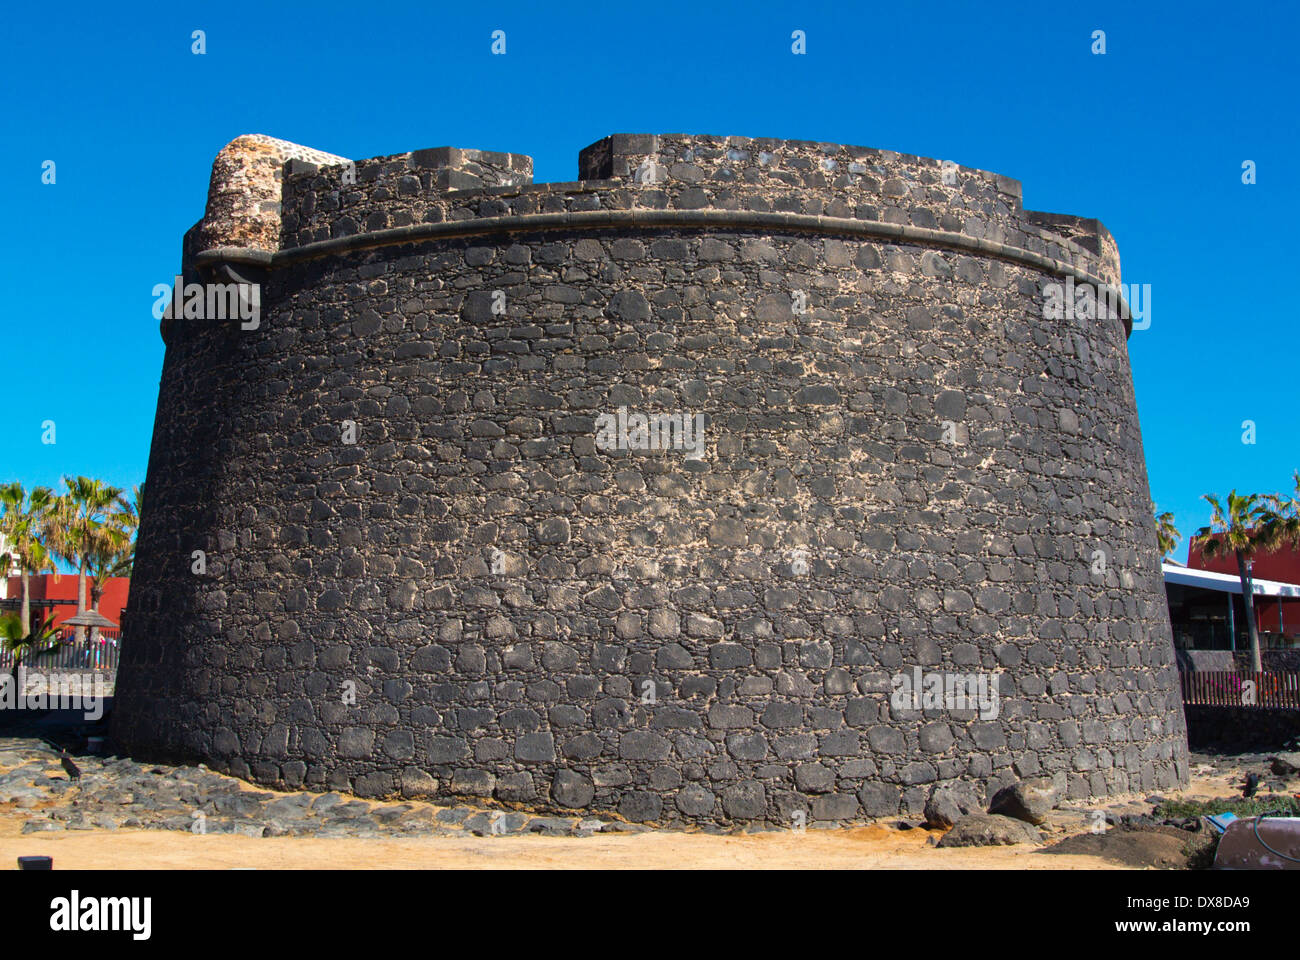 Torre de la San Buenaventura tower, el castilo, le château, Caleta de Fuste, Fuerteventura, Canary Islands, Spain, Europe Banque D'Images